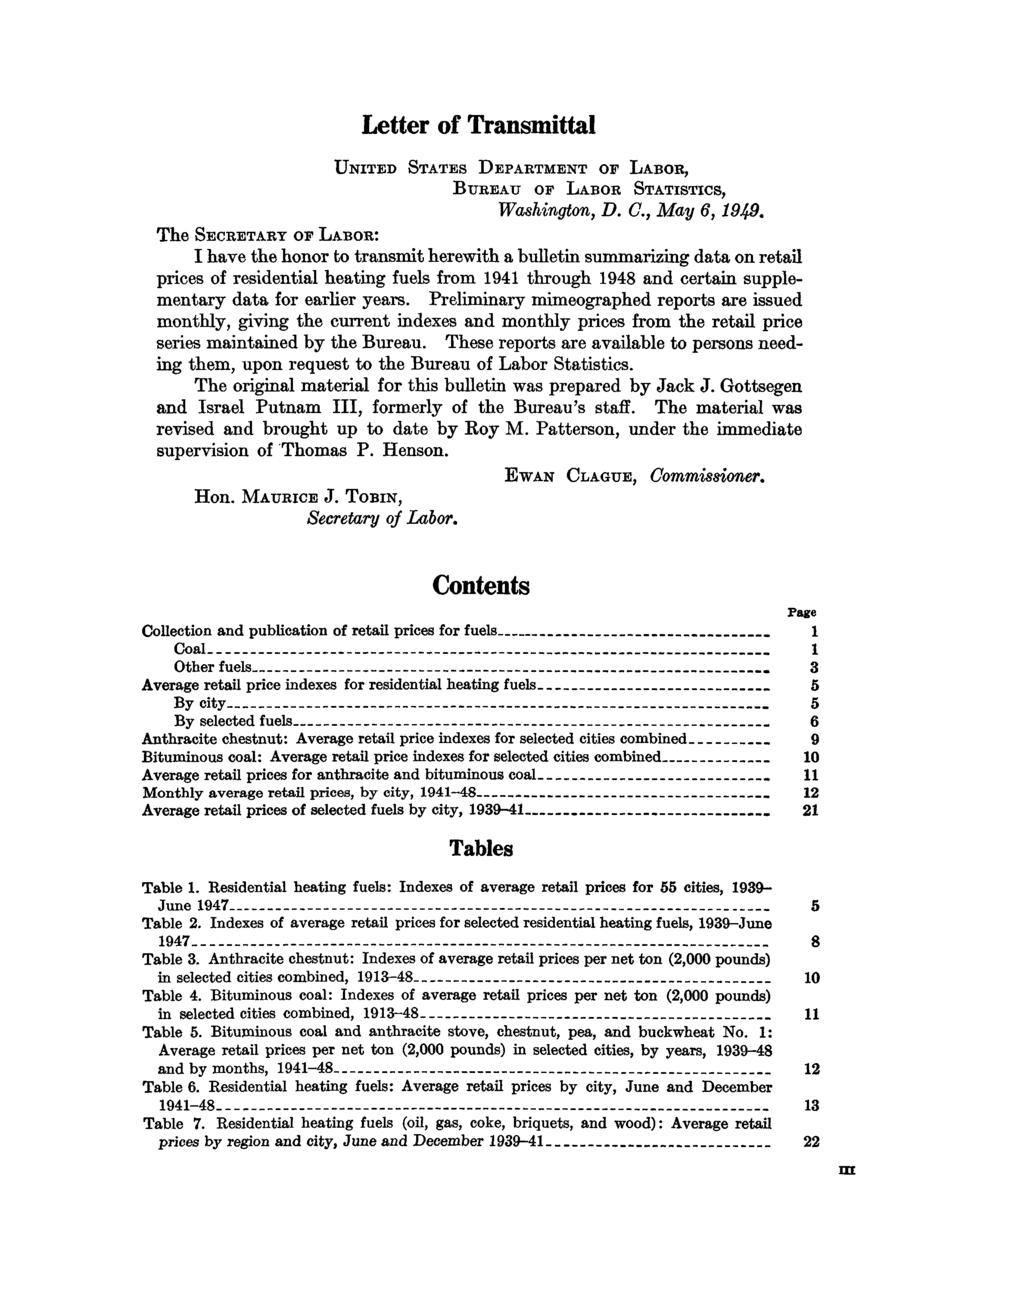 Letter of Transmittal U nited States D epartment of L abor, B ureau of L abor Statistics, Washington, D. GMay 6,1949.